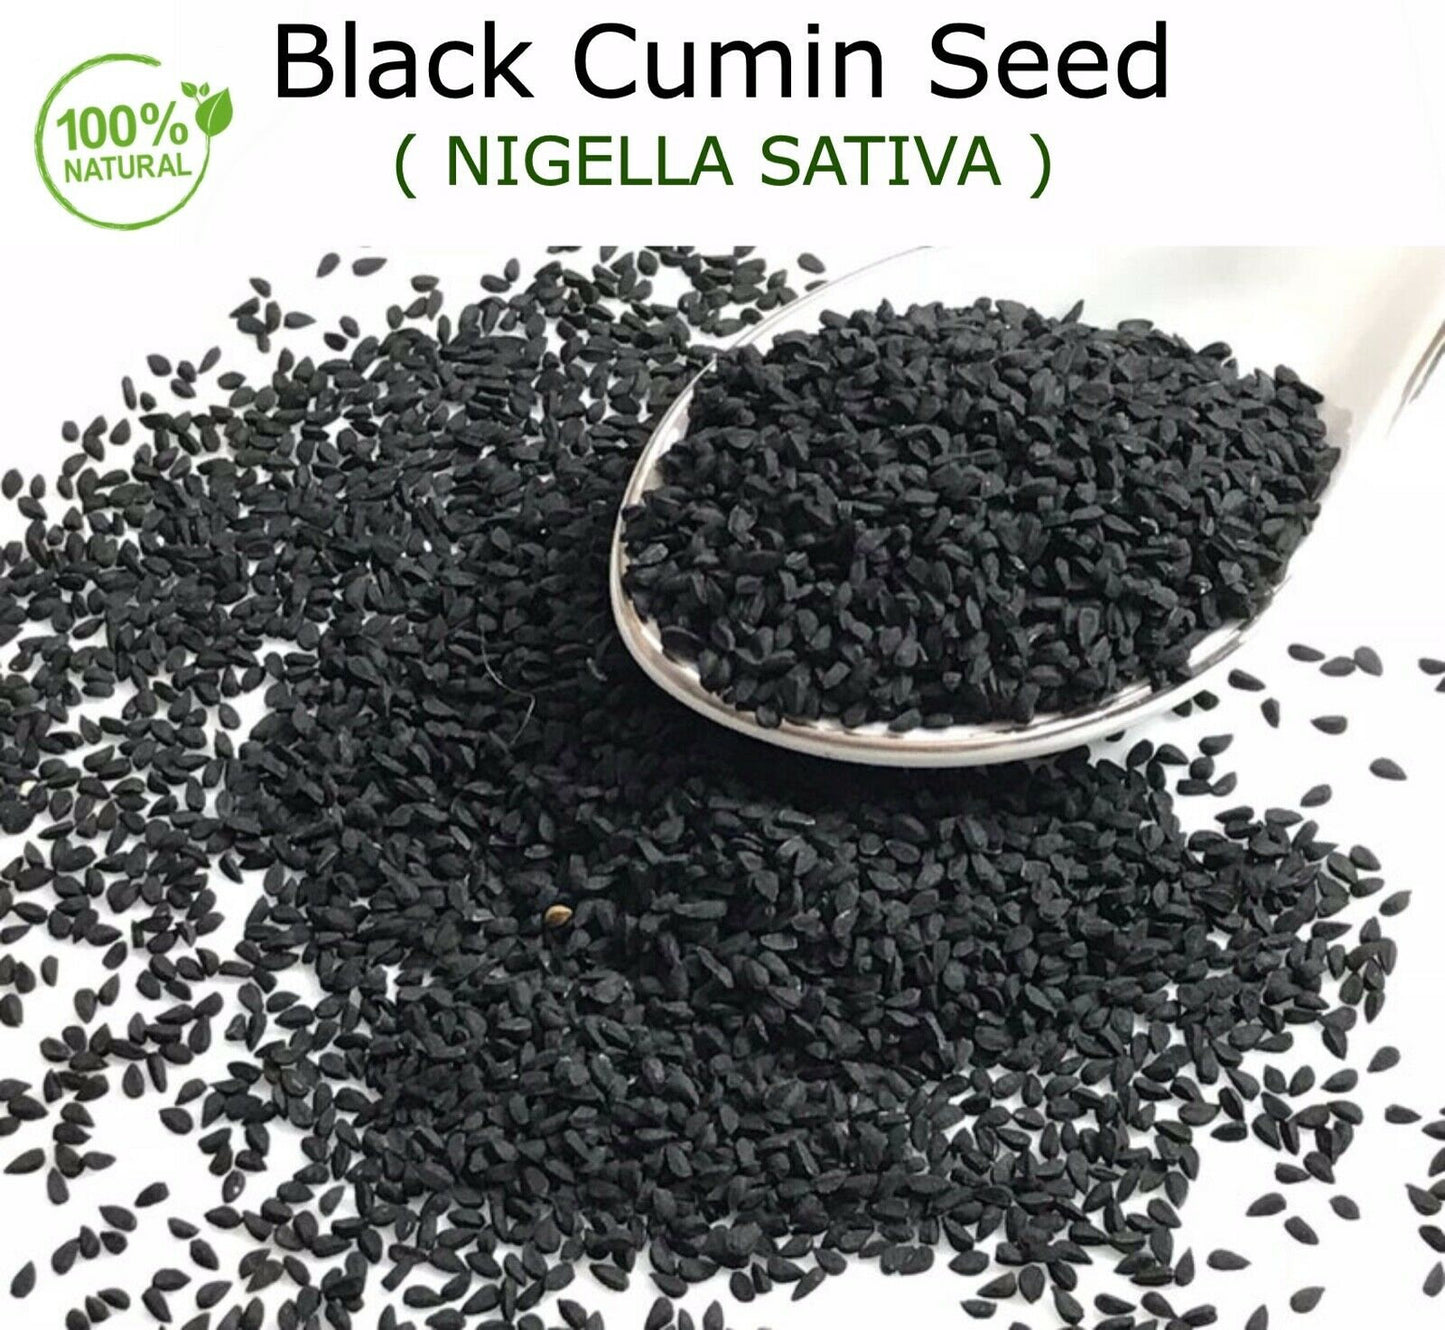 Black Seeds Qassim | Black Cumin Seed | 100% Natural & Pure | Saudi Arabia BLACK SEED | 0.5 lb | Bulk Nigella Sativa) | ORGANIC Bulk Black Seeds (Black Caraway) | الحبة السوداء القصيمي | القصيم السعودية